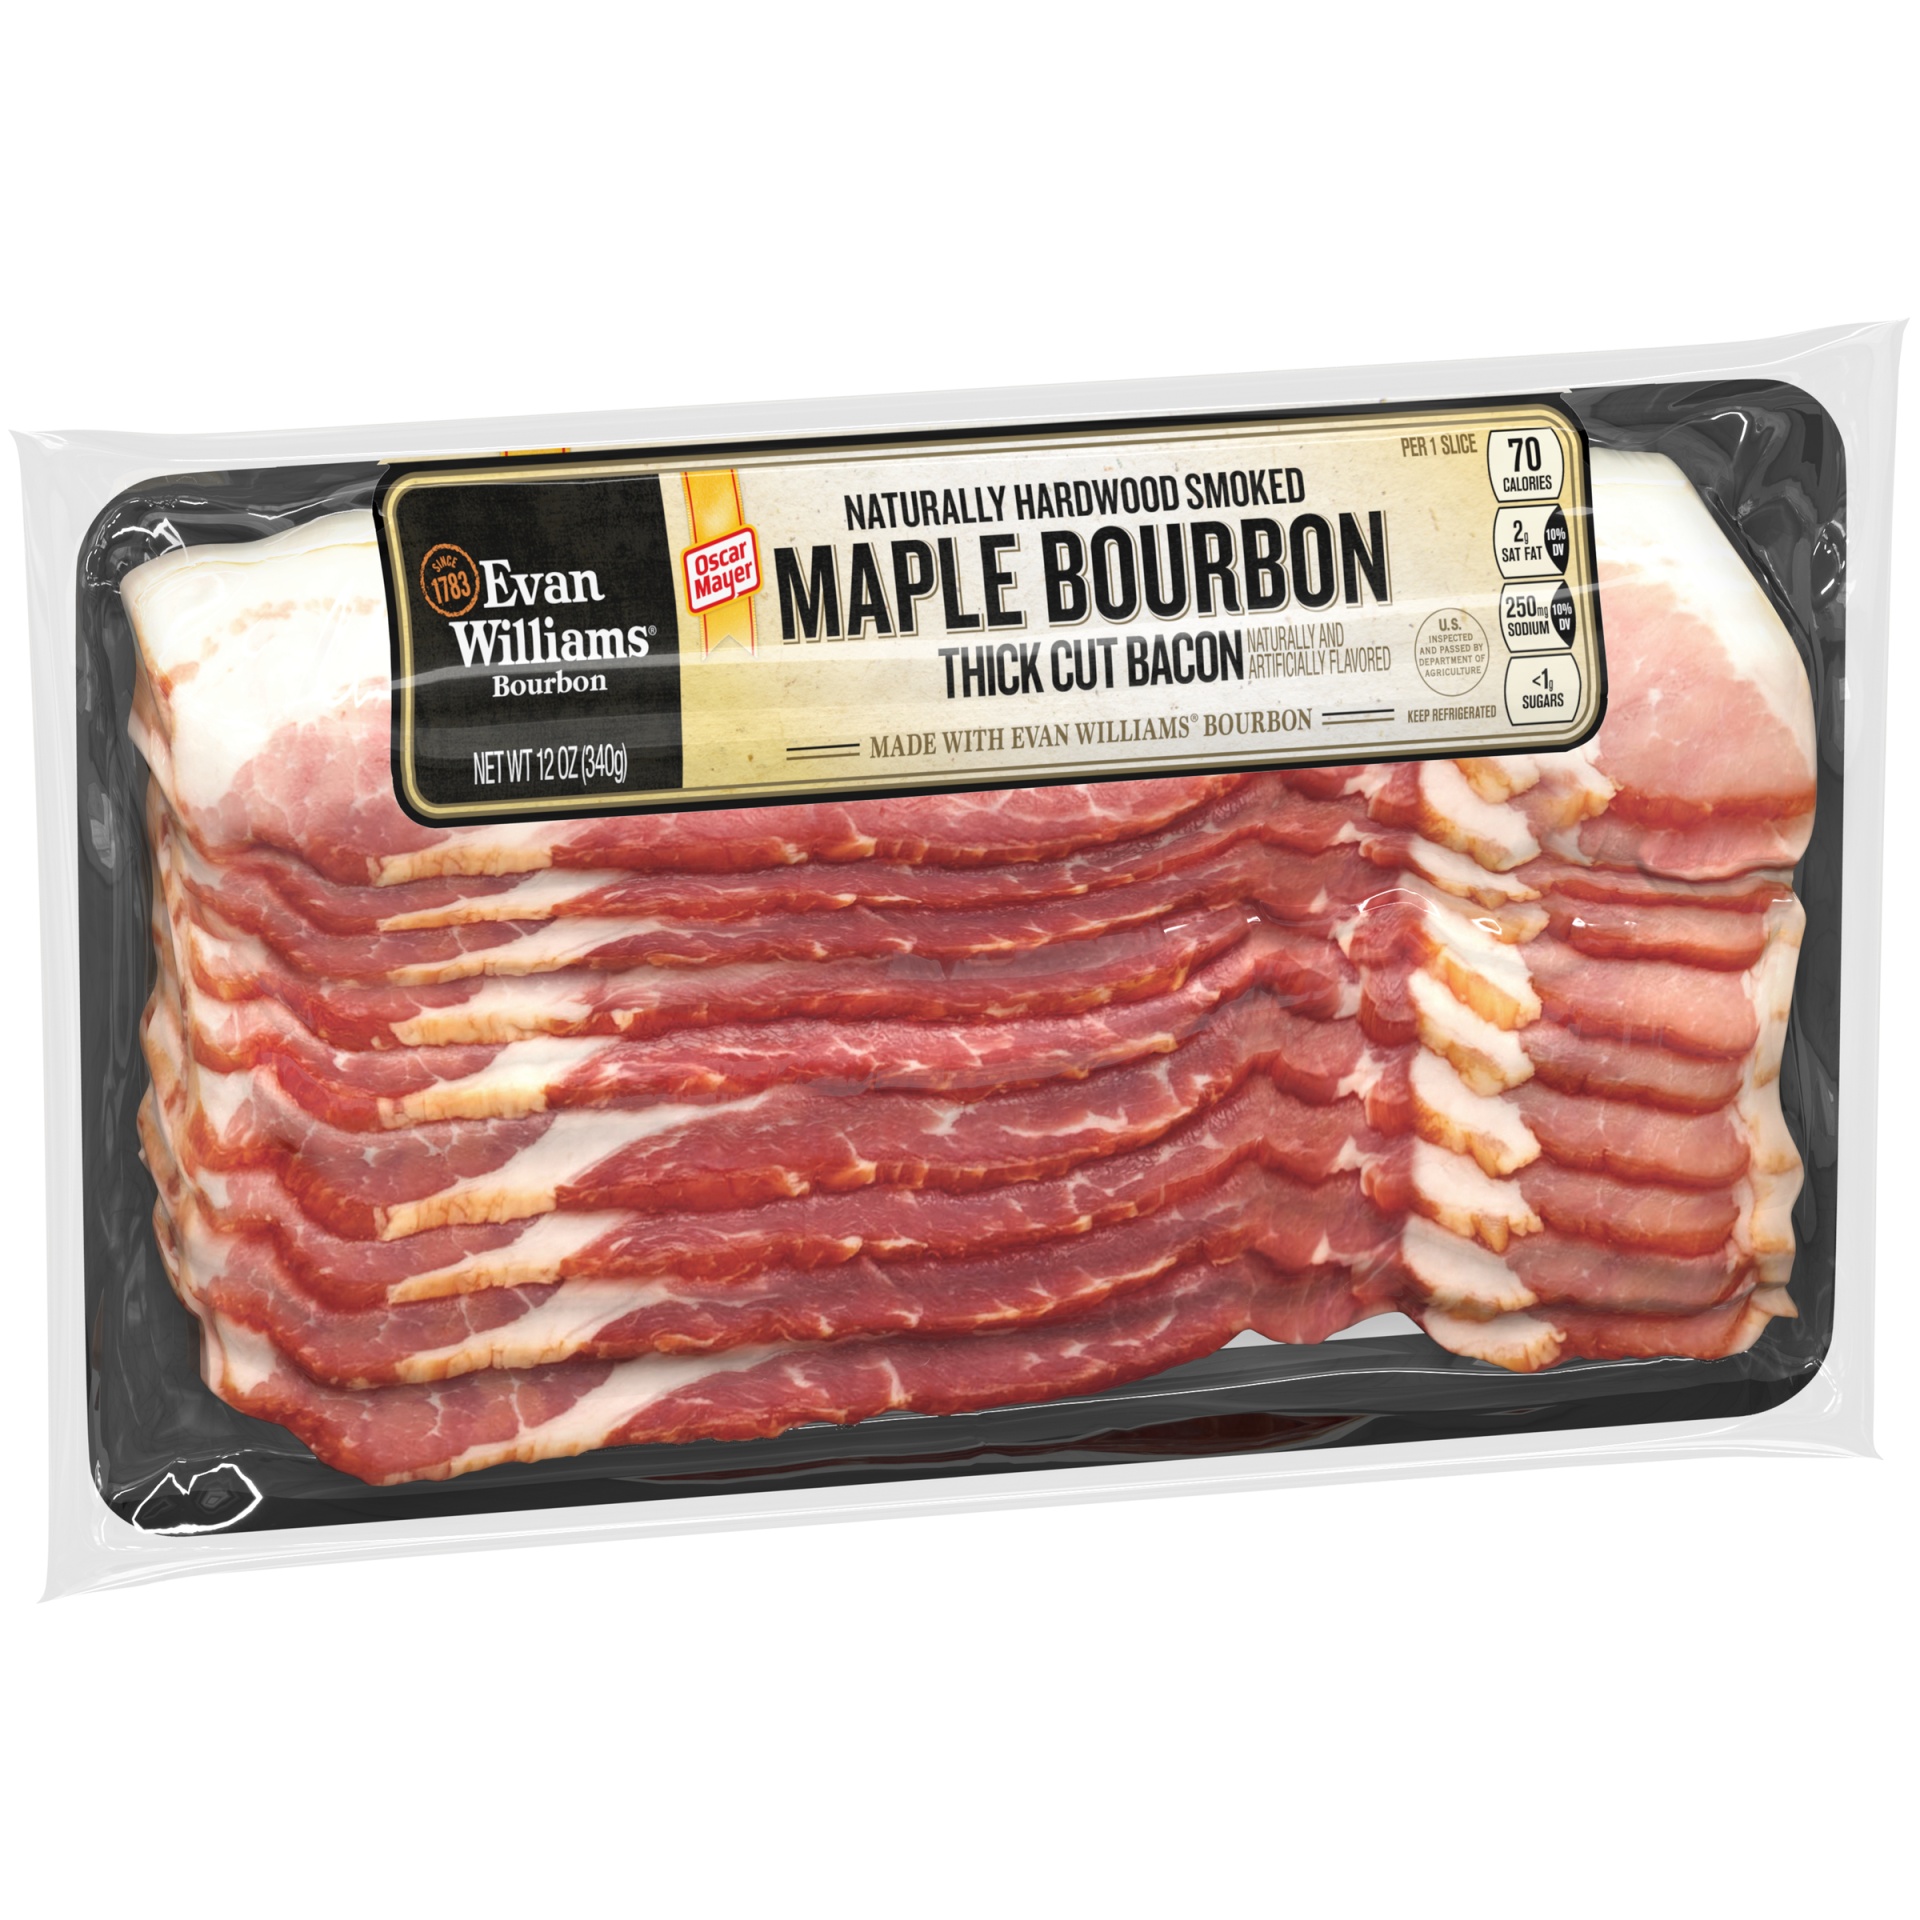 slide 7 of 12, Oscar Mayer Maple Bourbon Naturally Hardwood Smoked Thick Cut Bacon with Evan Williams Bourbon, 8-10 slices, 12 oz